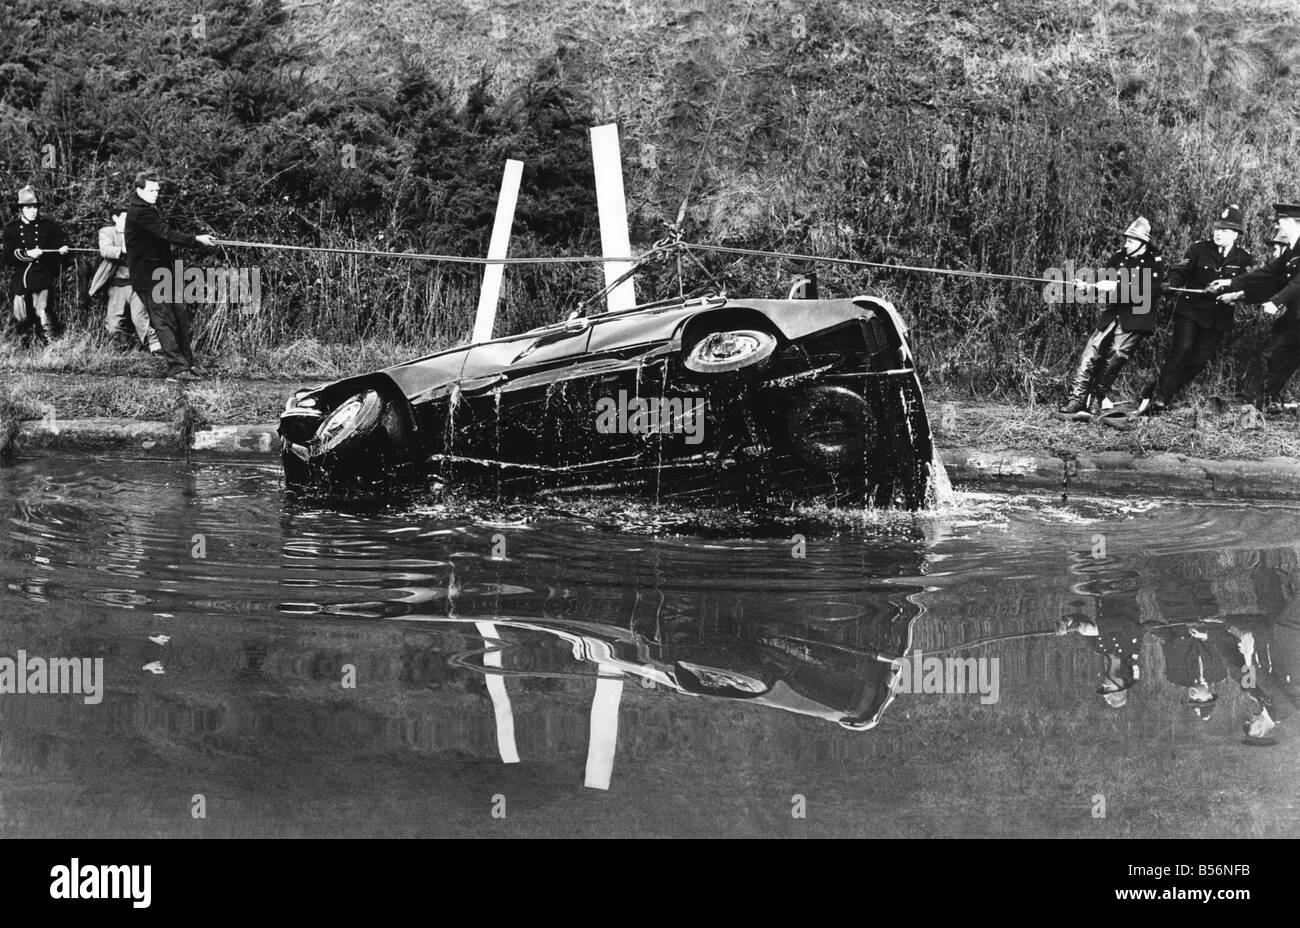 Crashed car Black and White Stock Photos & Images - Alamy